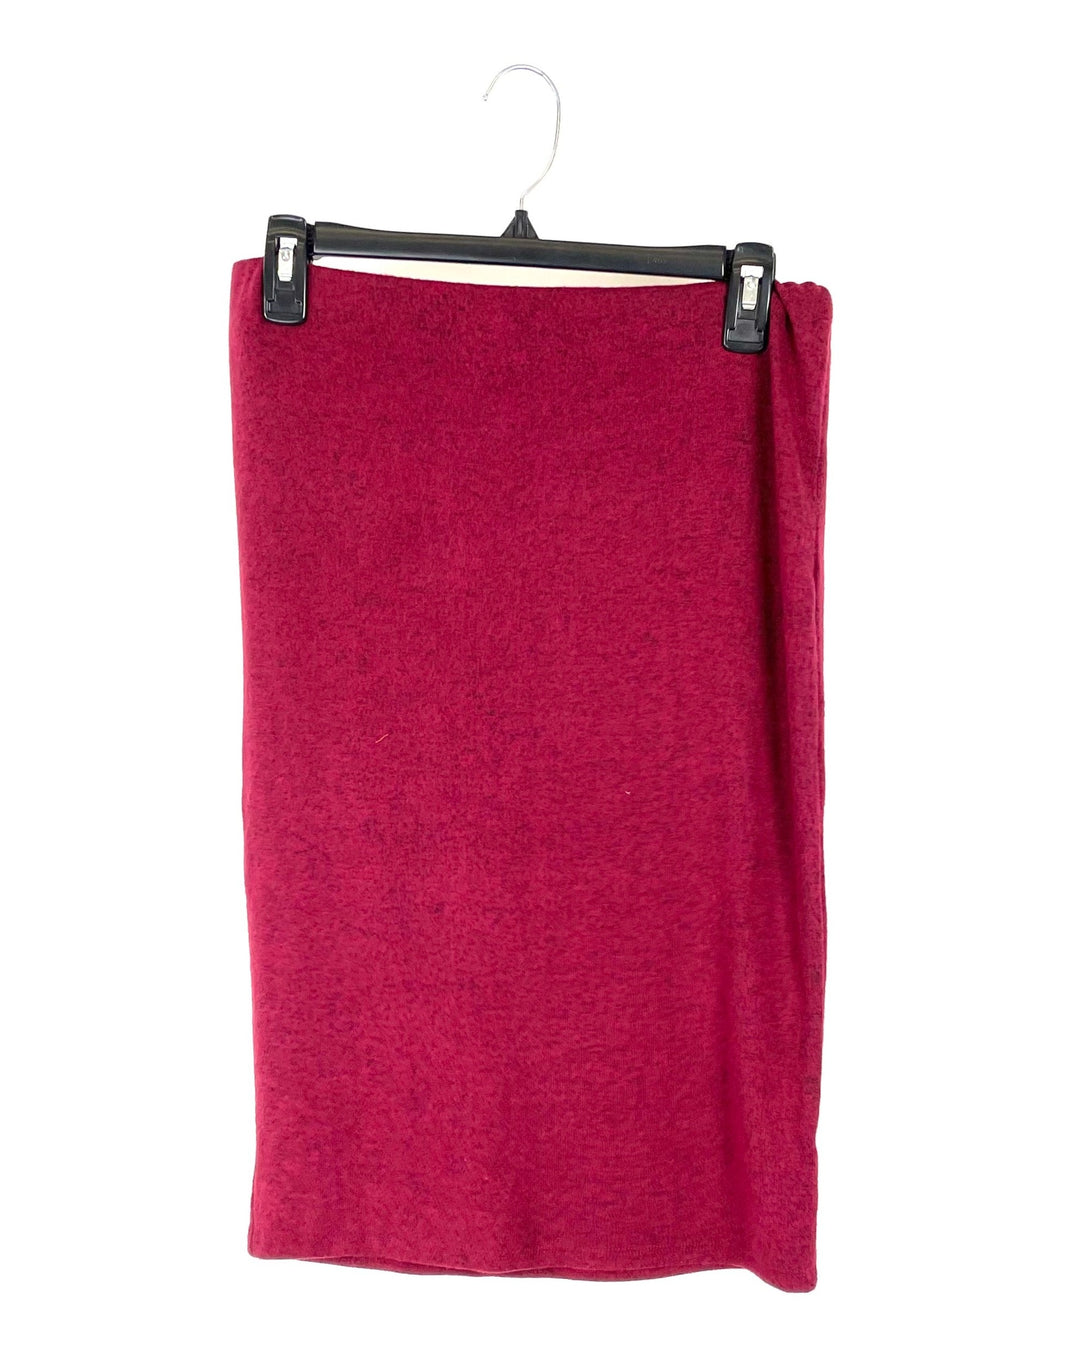 Red Pencil Skirt - Small, Medium & Large